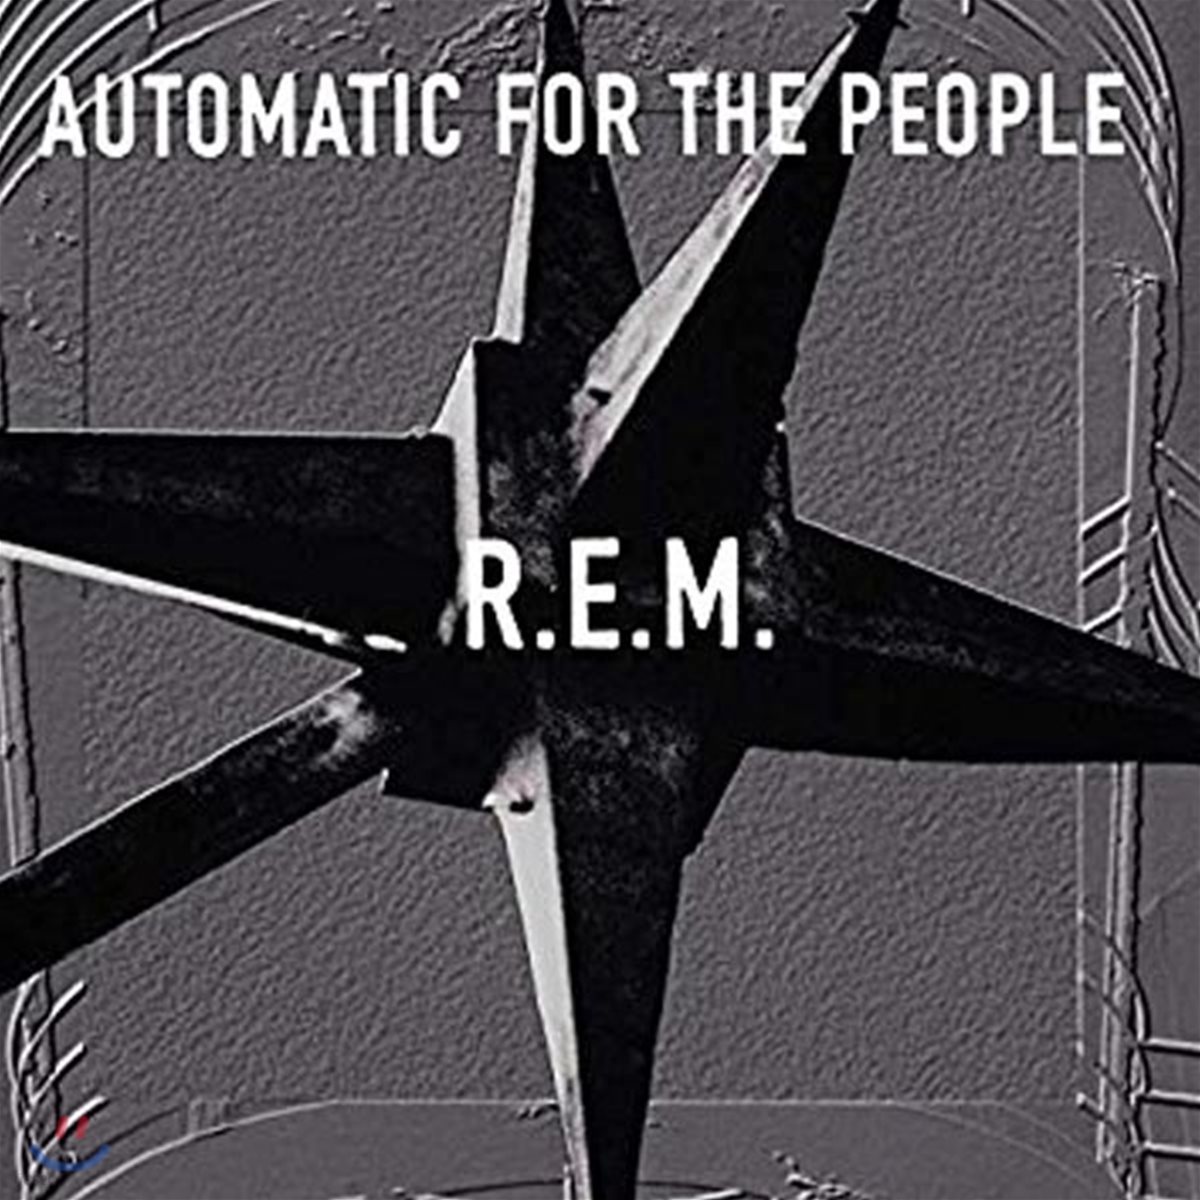 R.E.M. - Automatic For The People [발매 25주년 기념 리마스터드 에디션 LP]